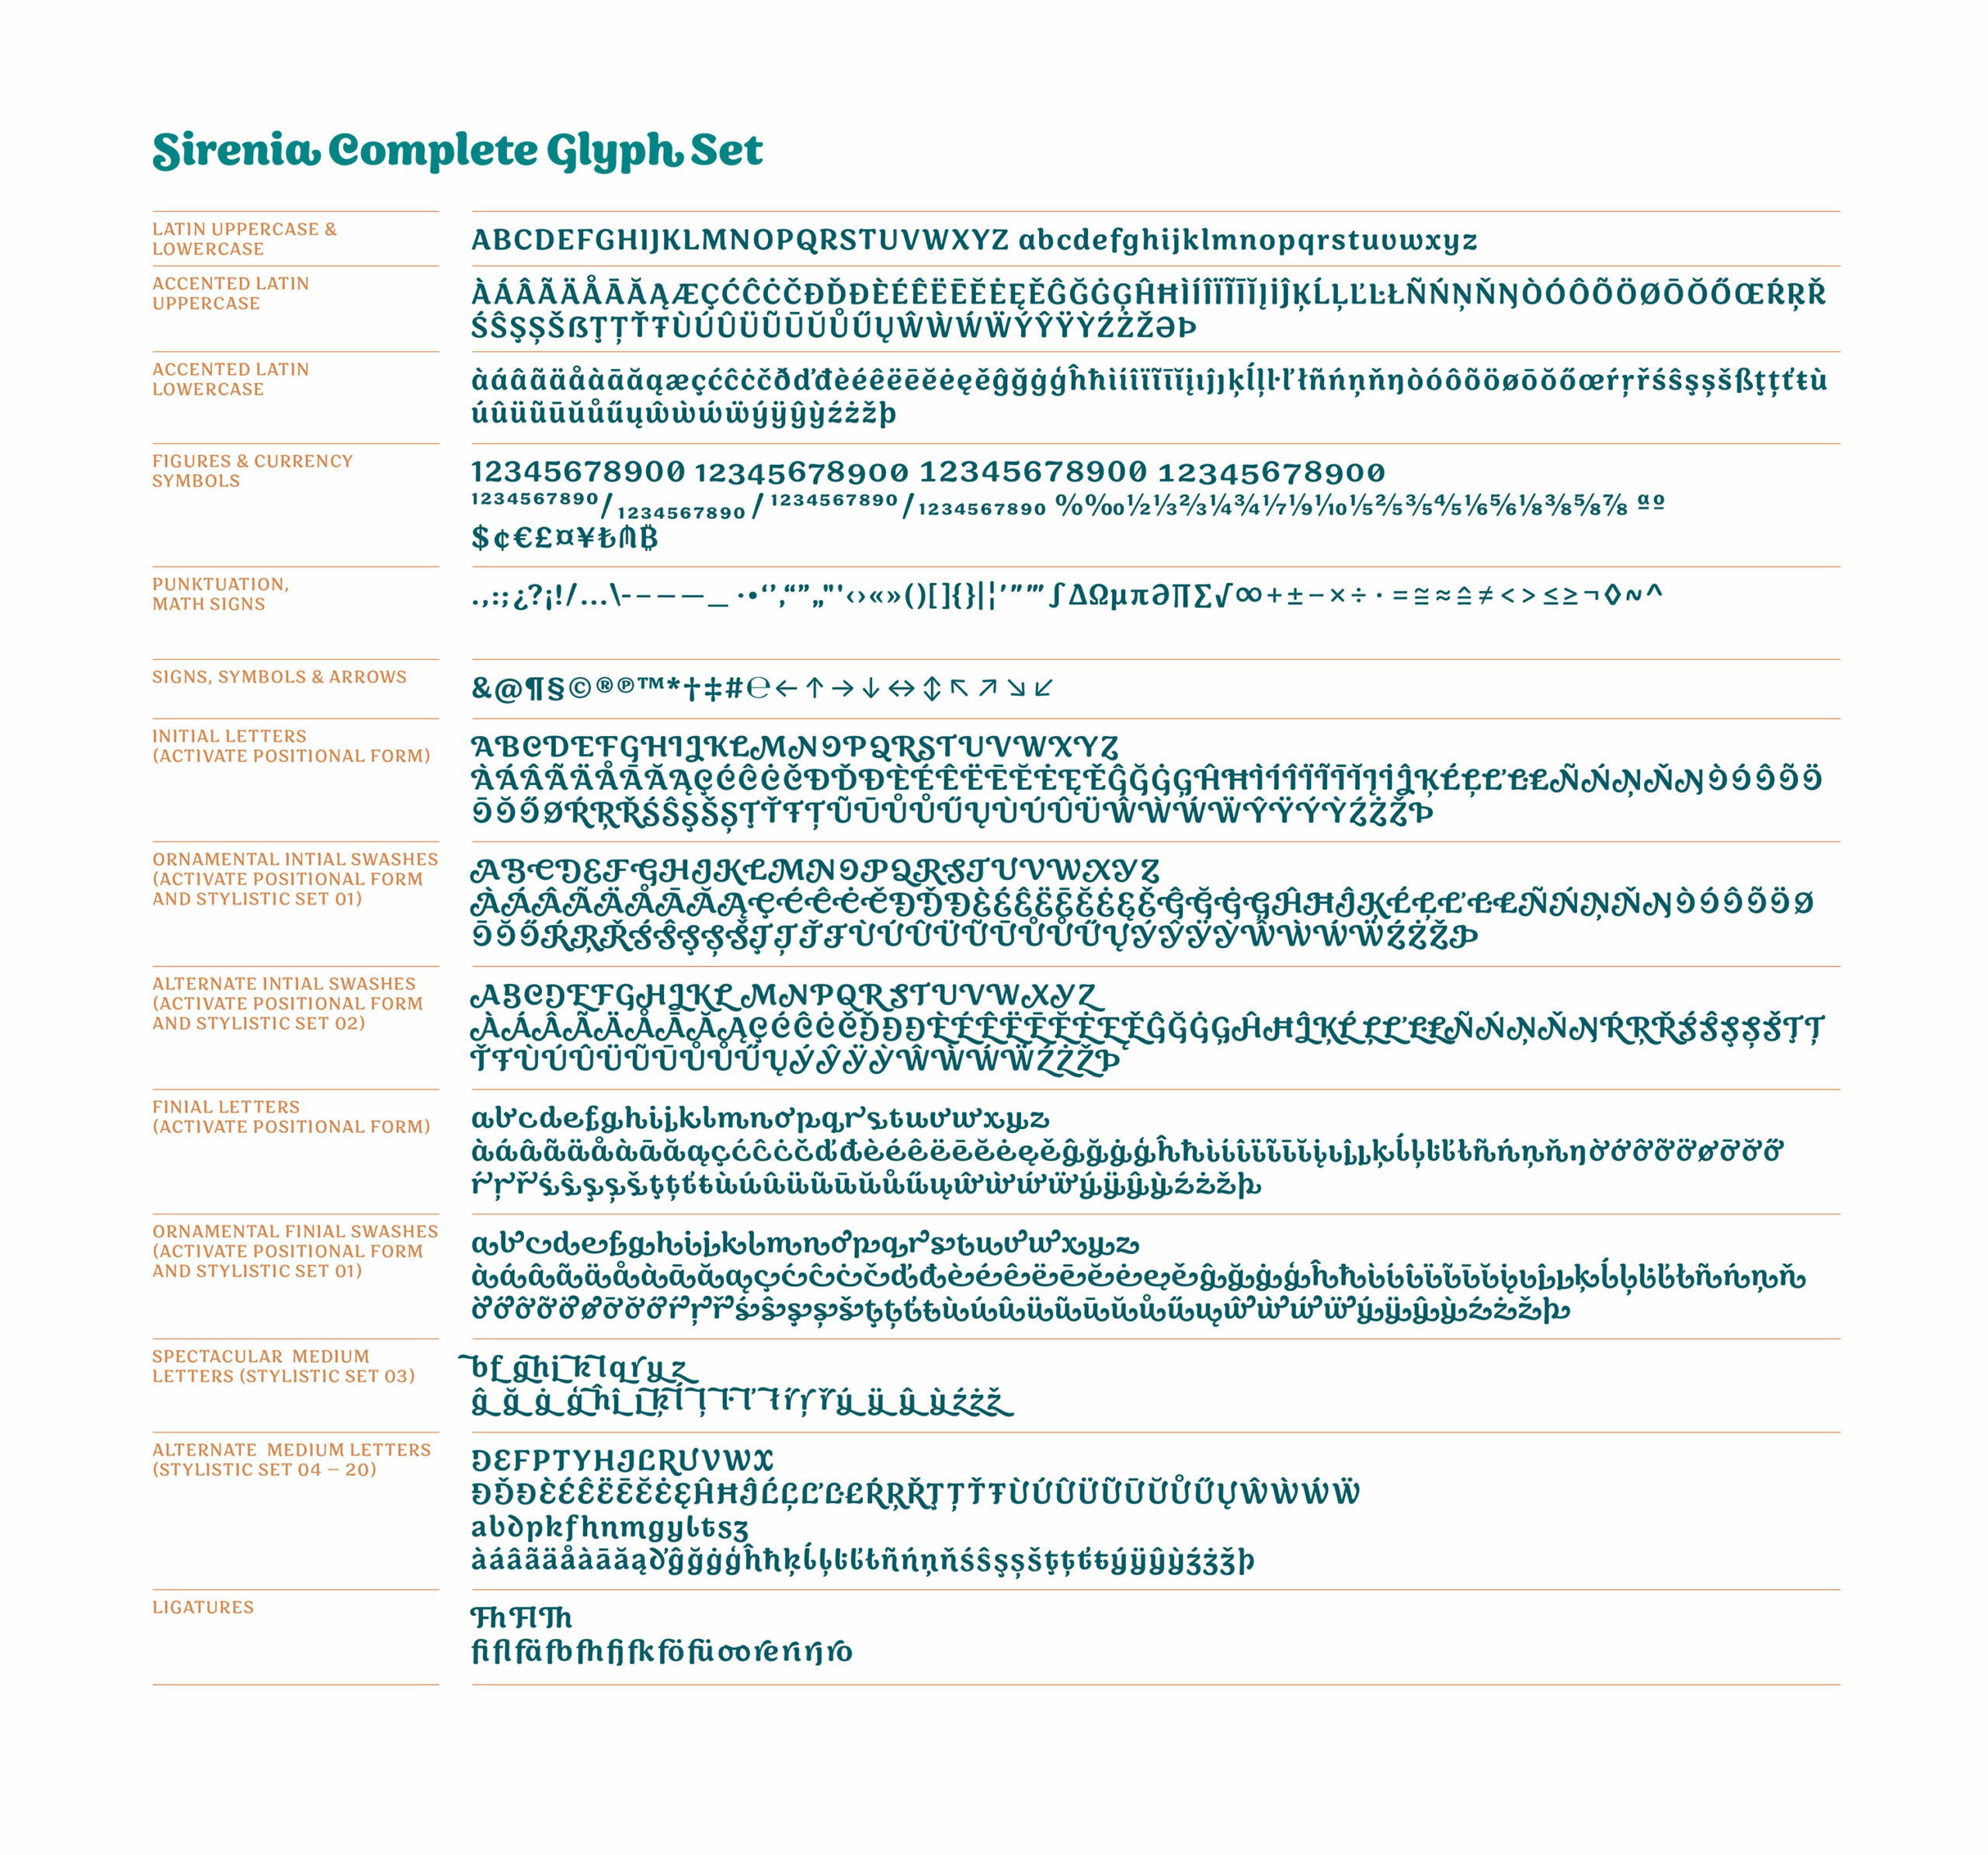 Sirenia Complete Glyphs Set, Quelle: Floodfonts